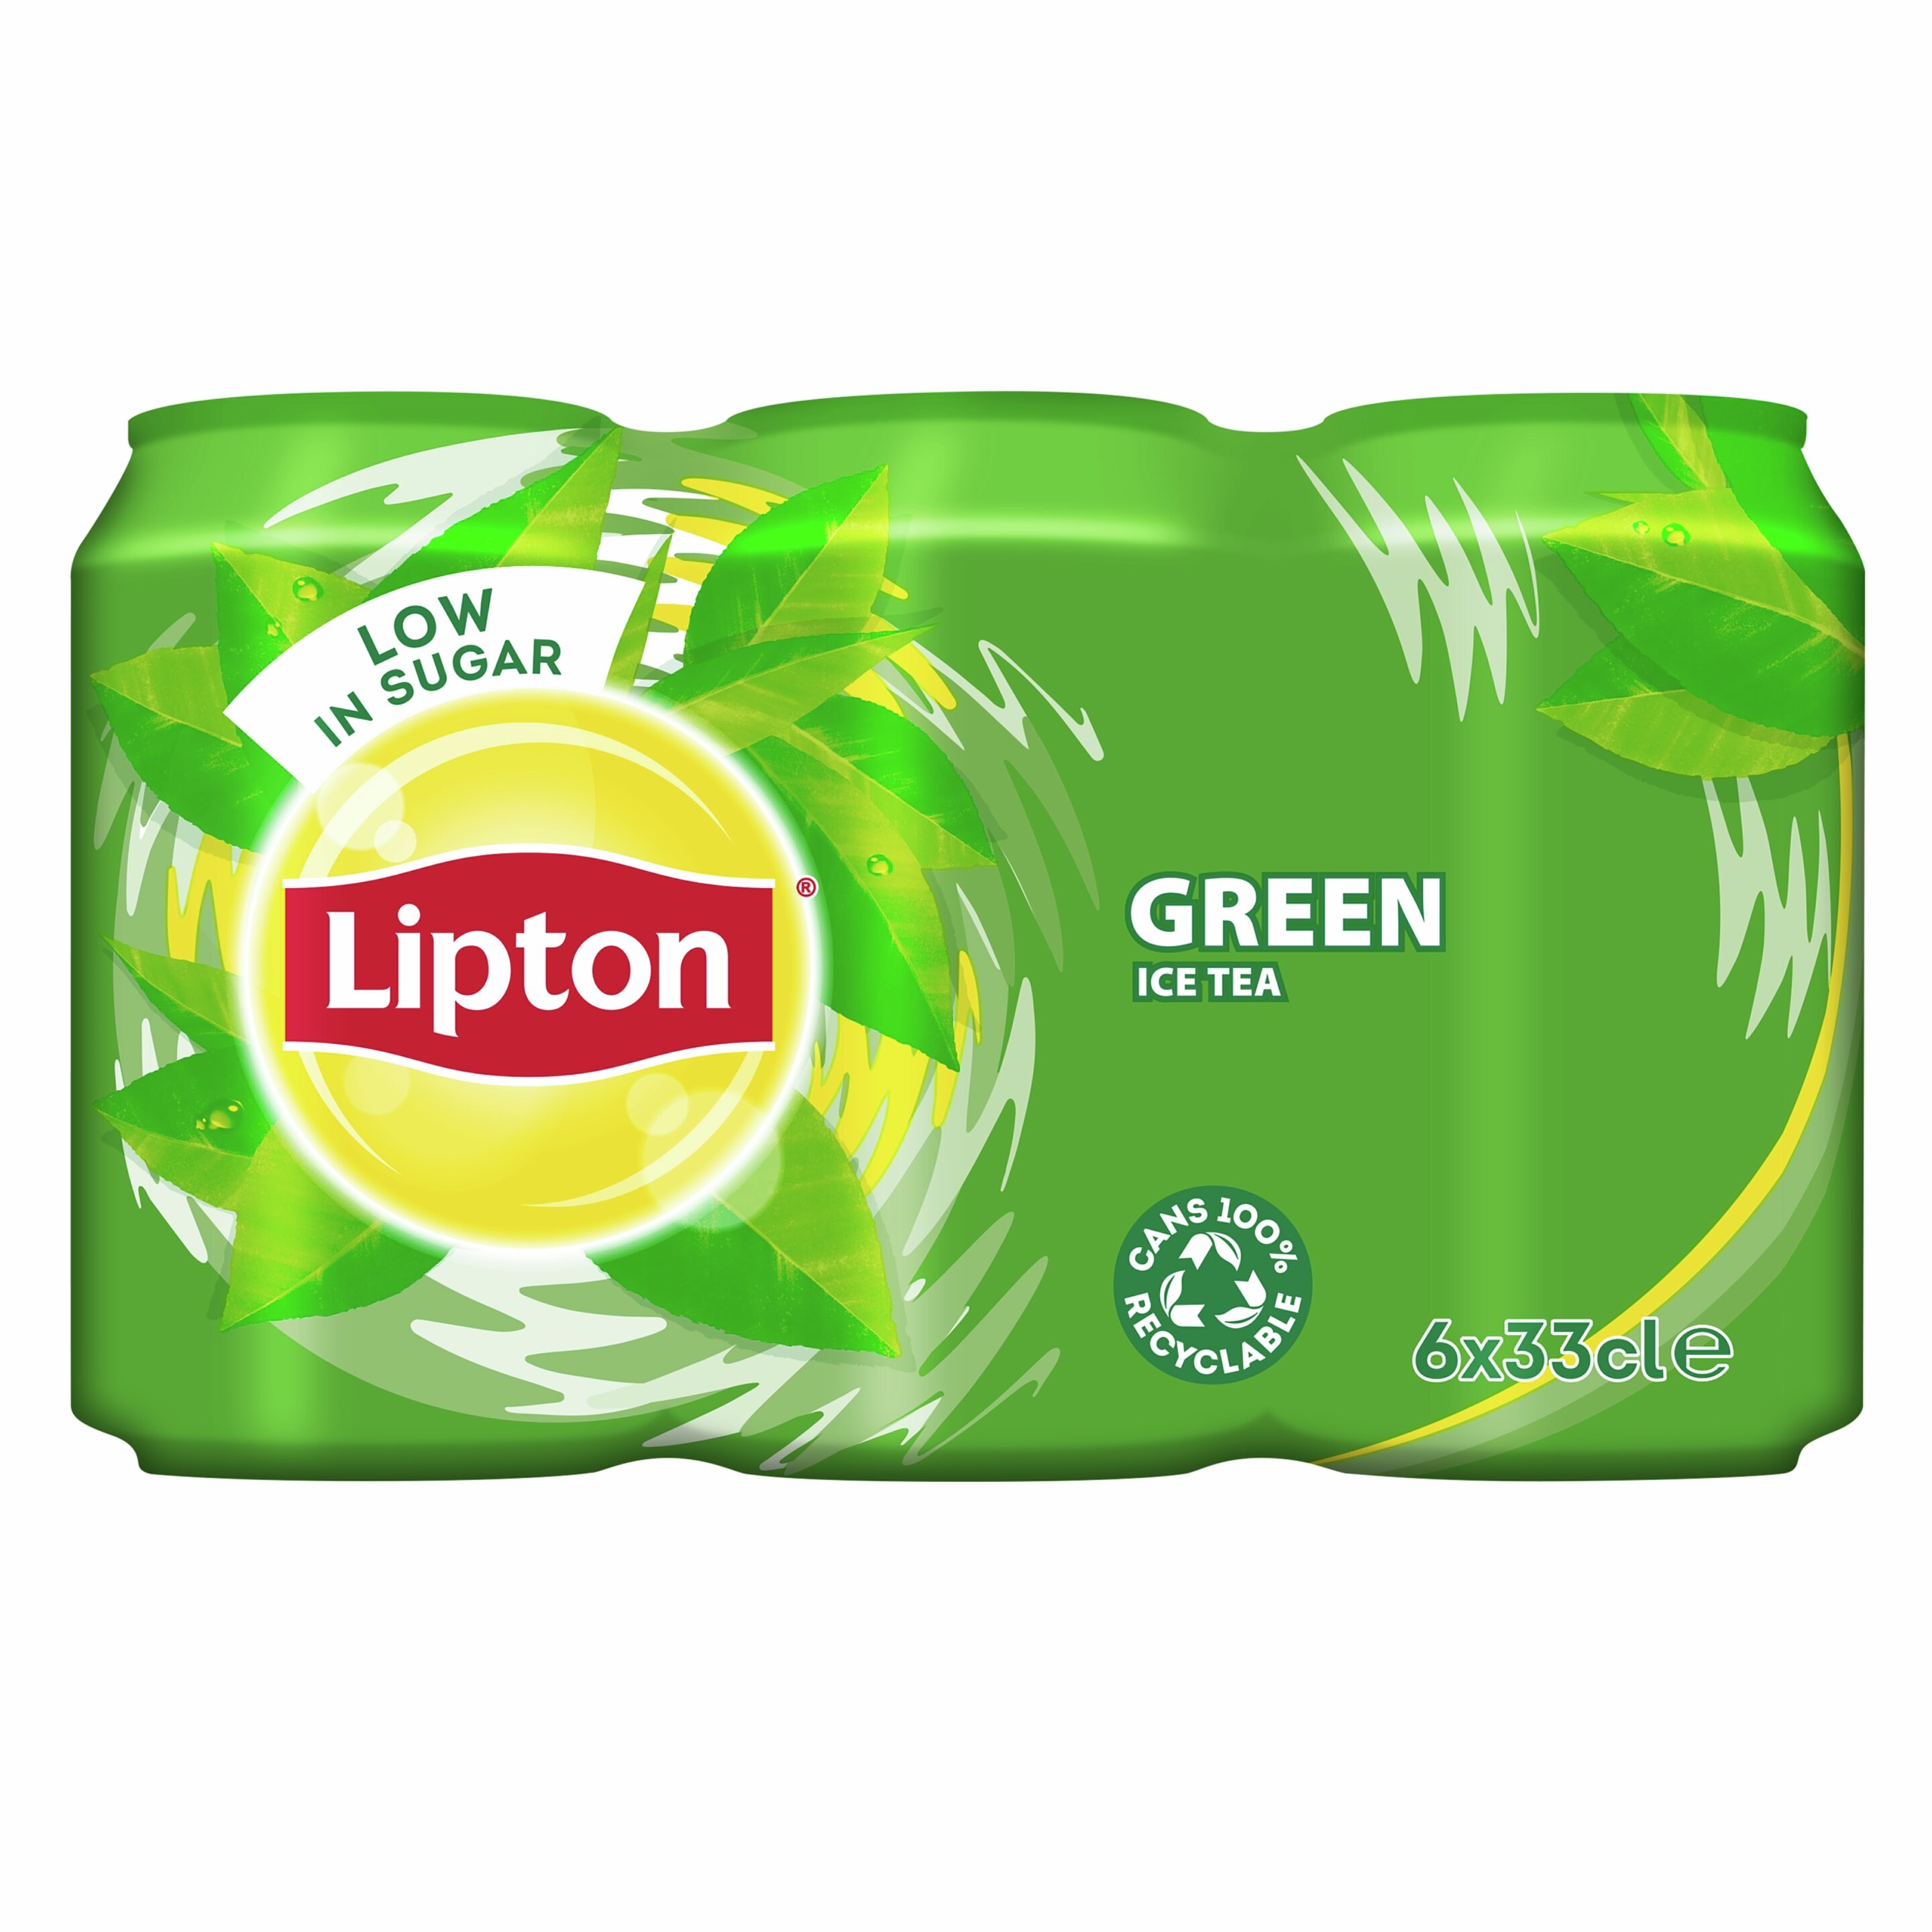 Lipton Ice Tea Green 6 x 330ml